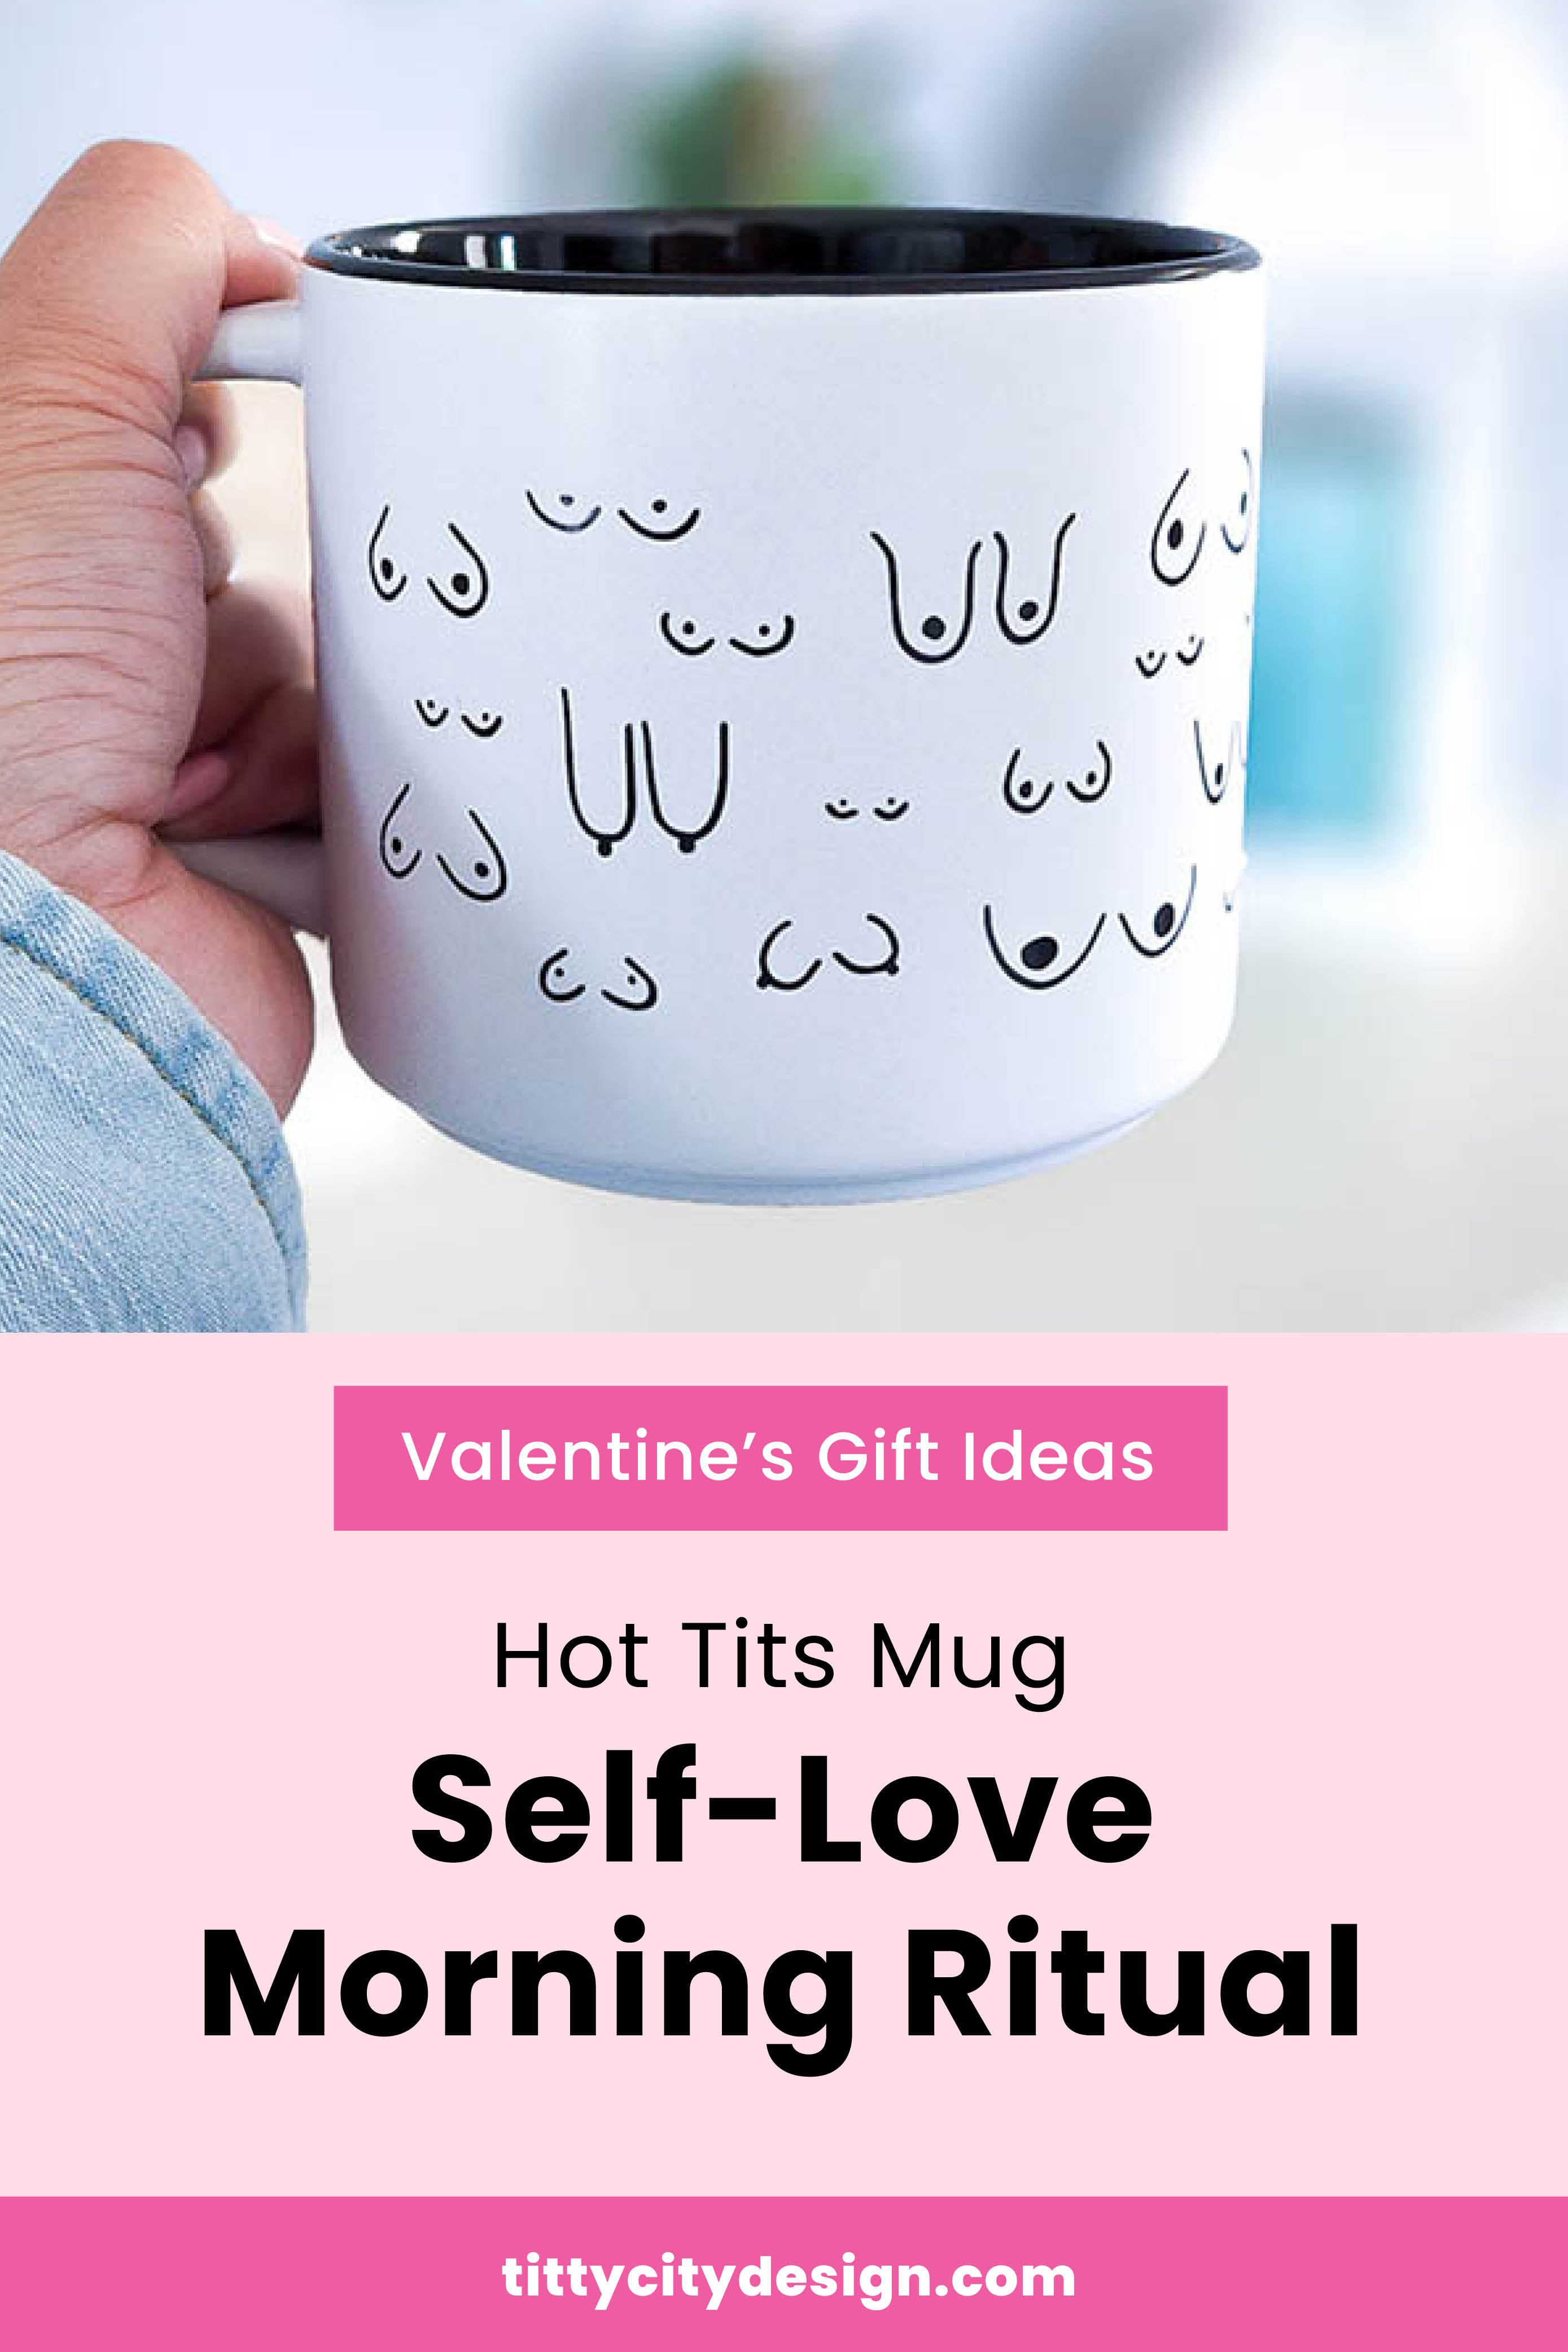 Valentines Gift Ideas - Booby Mug, Hot Tits Boob Mug "Self-love Morning Ritual"